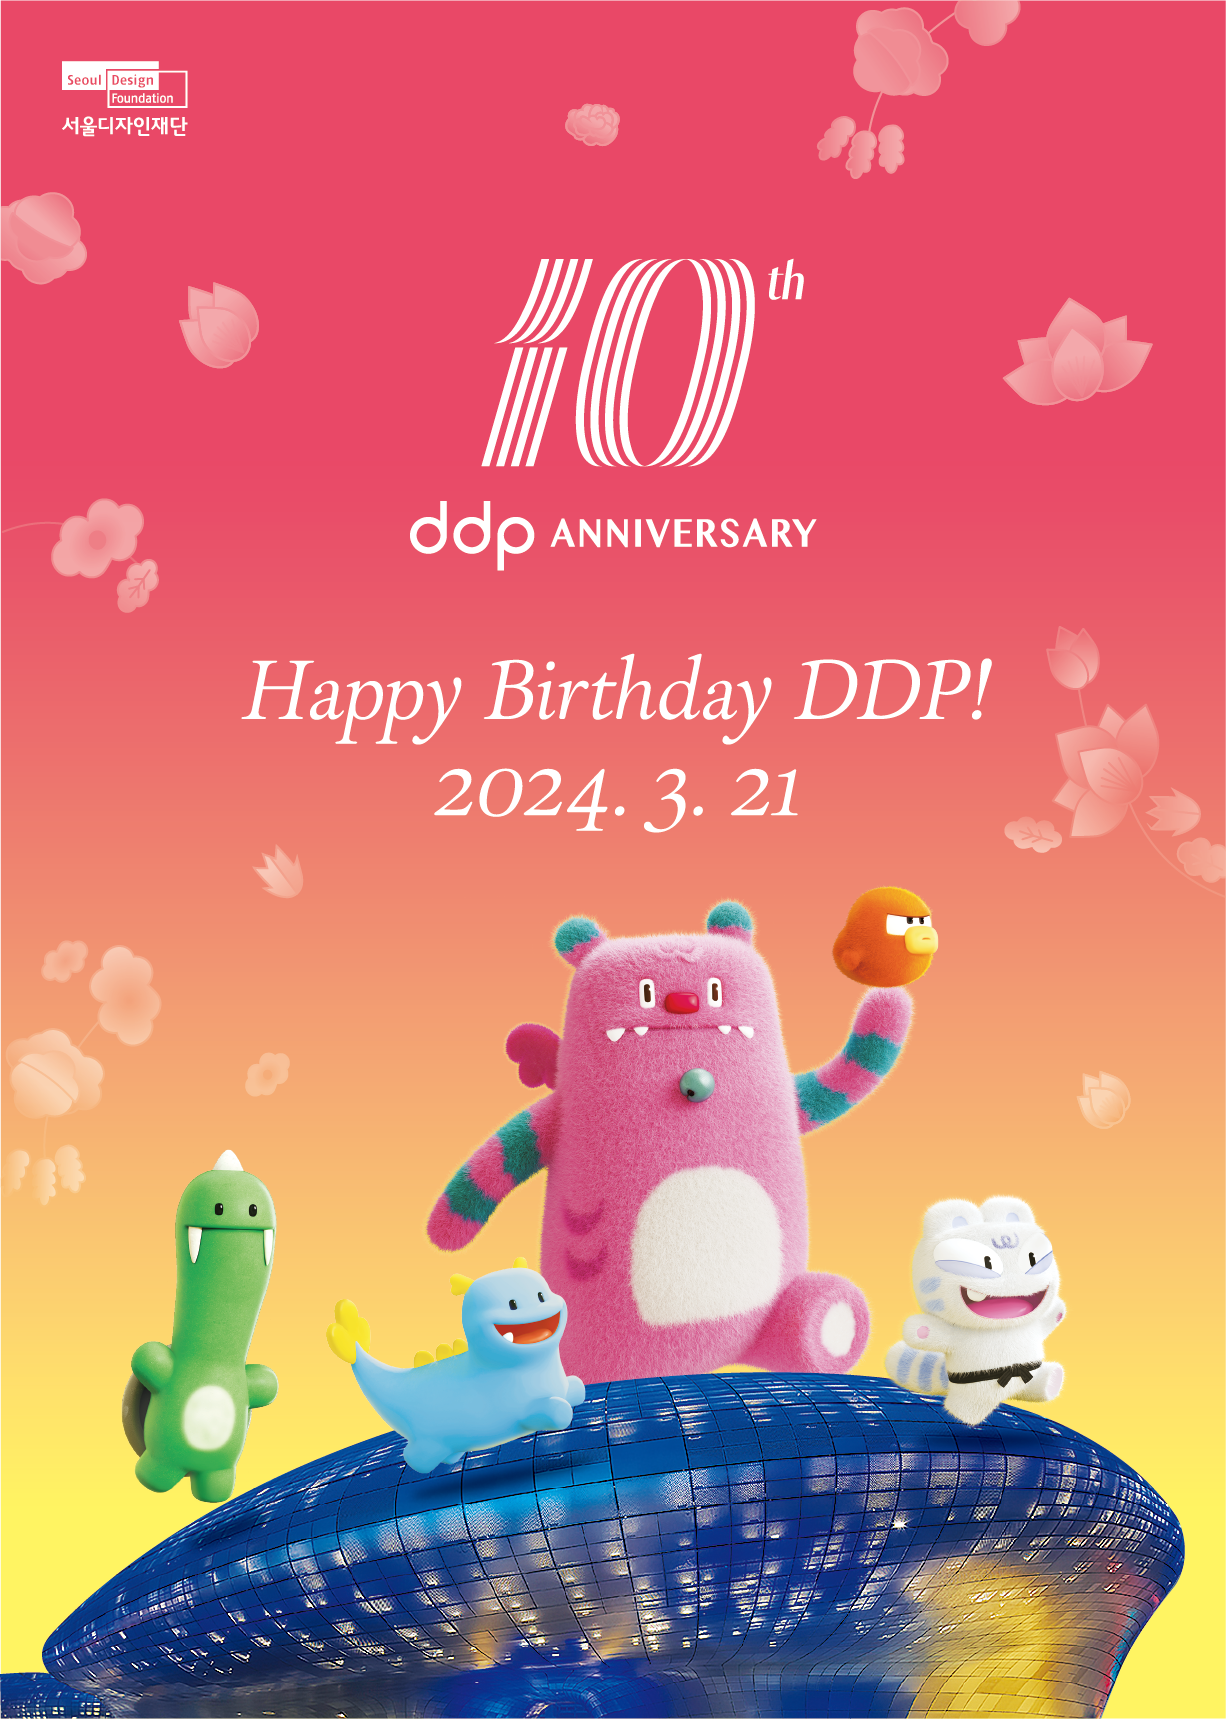 DDP 개관 10주년 기념 행사